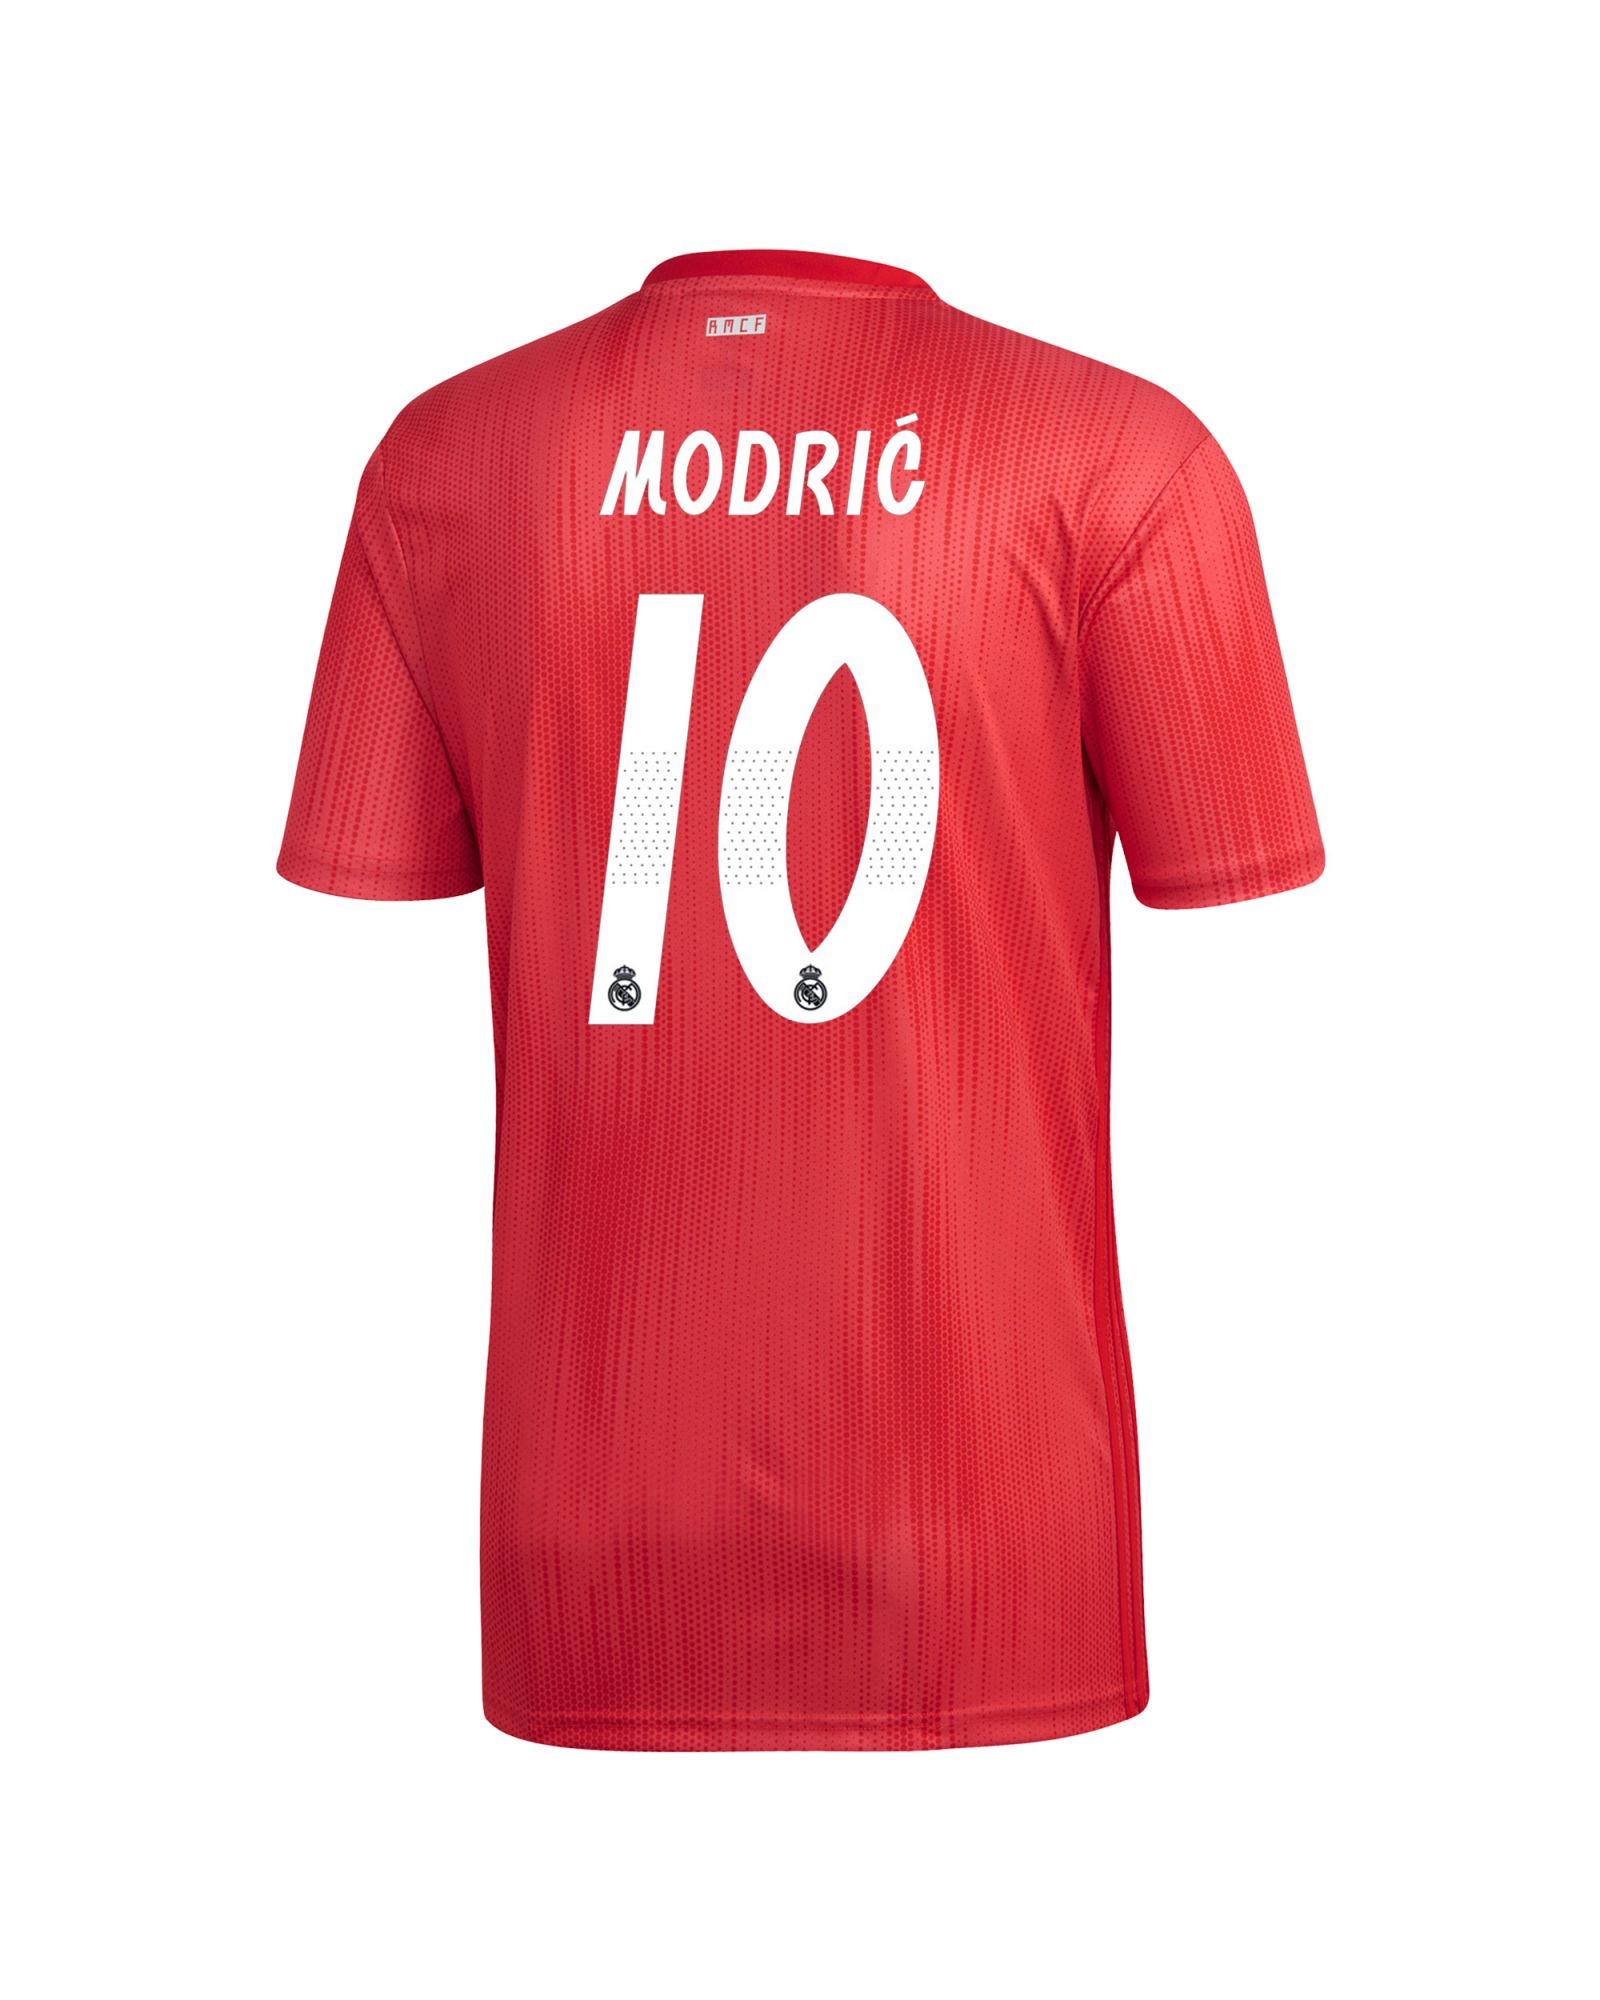 Camiseta 3ª Real Madrid 2018/2019 Modric Coral - Fútbol Factory